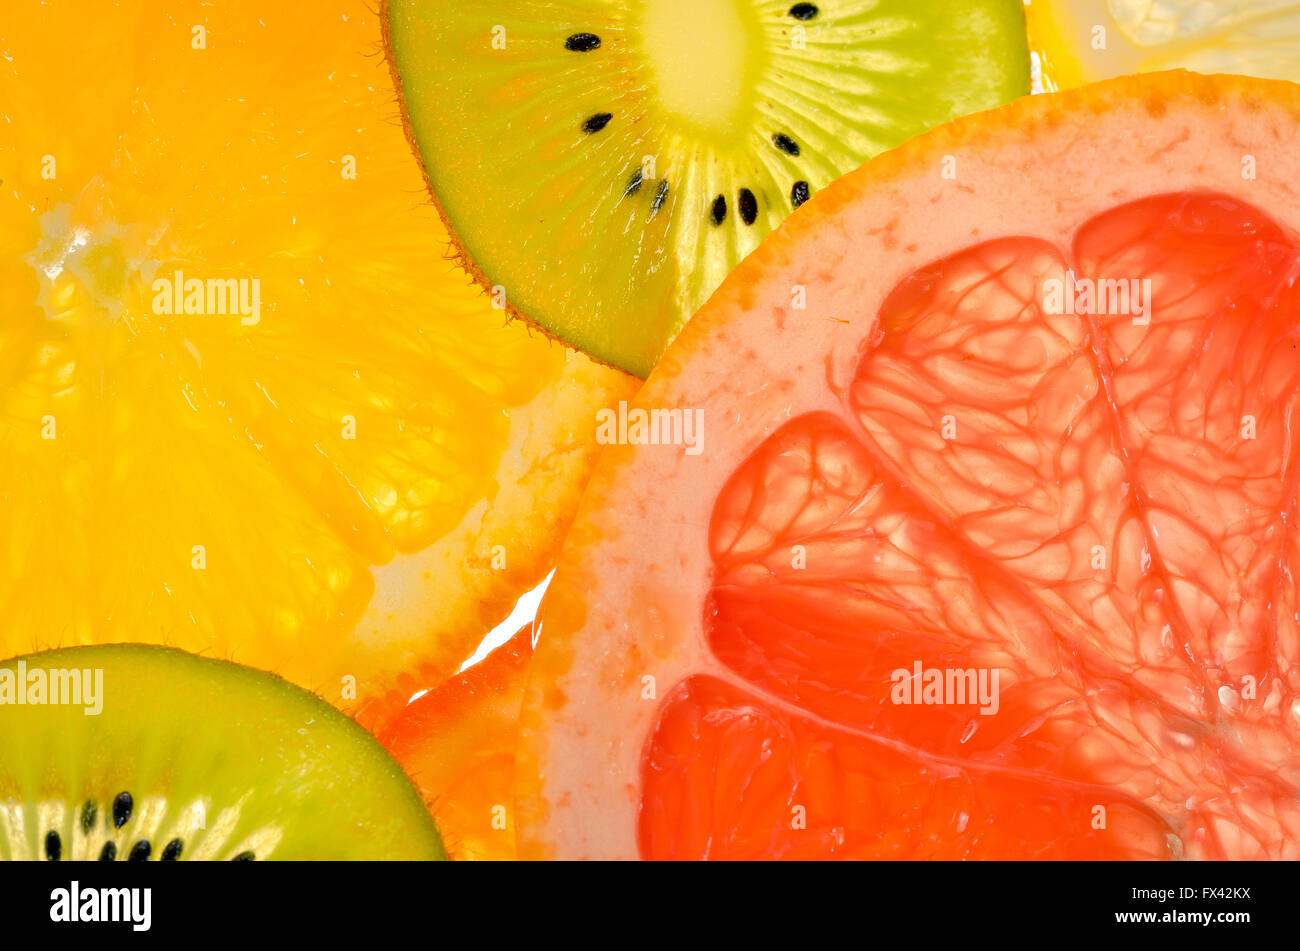 https://c8.alamy.com/comp/FX42KX/details-of-lime-lemon-kiwi-and-orange-slices-FX42KX.jpg